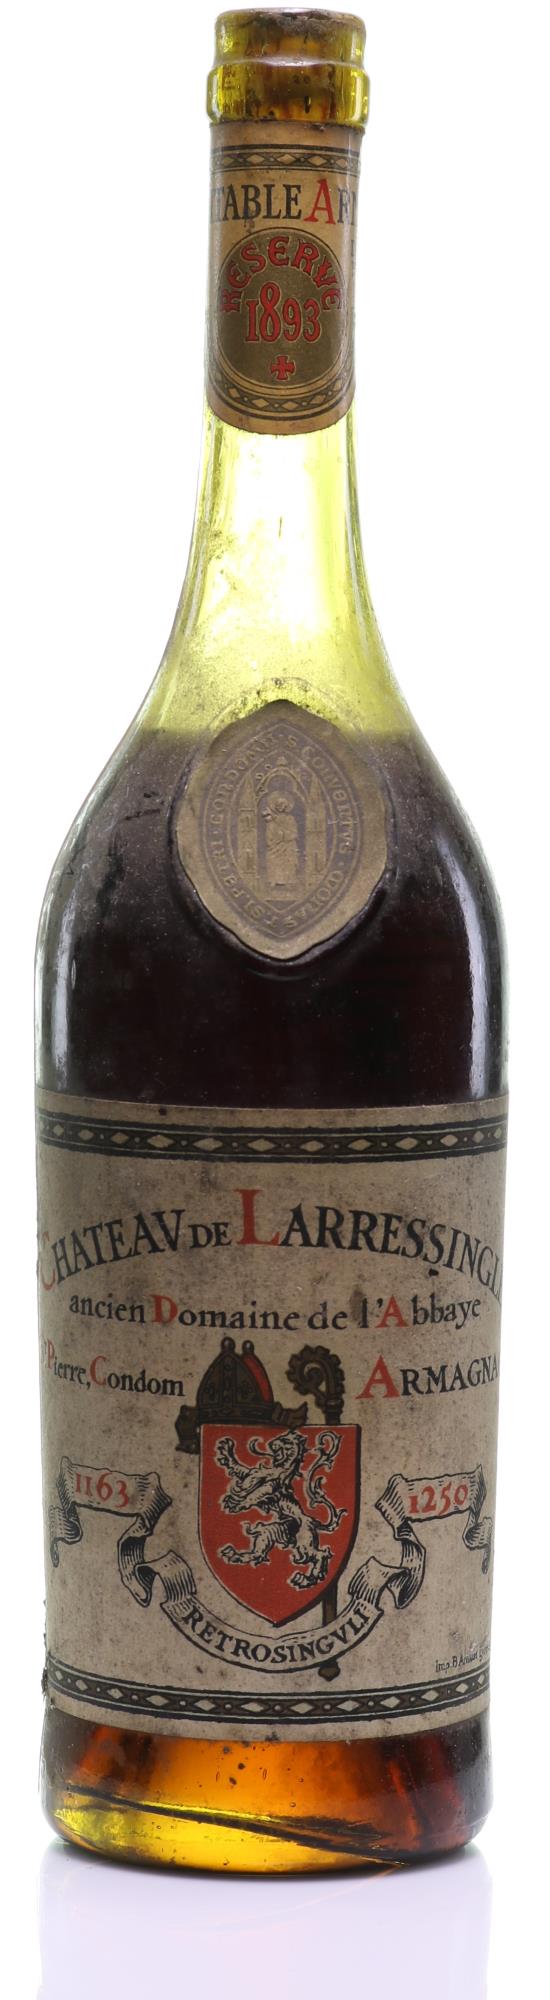 Larressingle Armagnac 1893 Réservé NV – Rated 95 by Wine Enthusiast - Rue Pinard